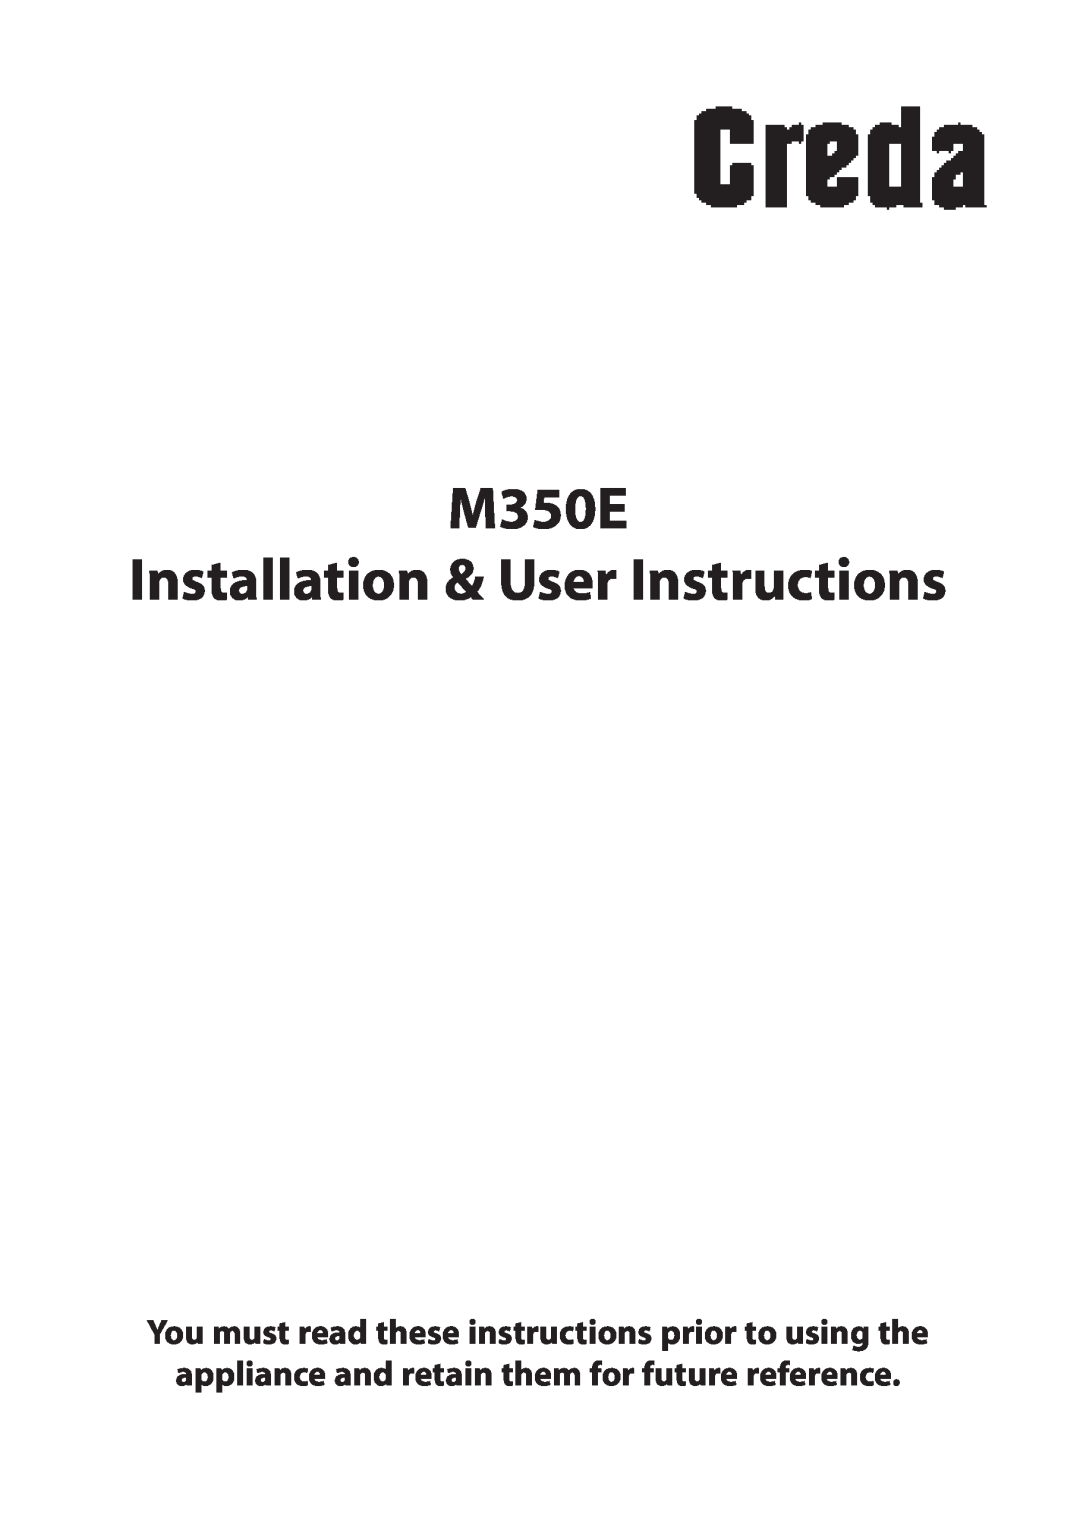 Creda manual M350E Installation & User Instructions 